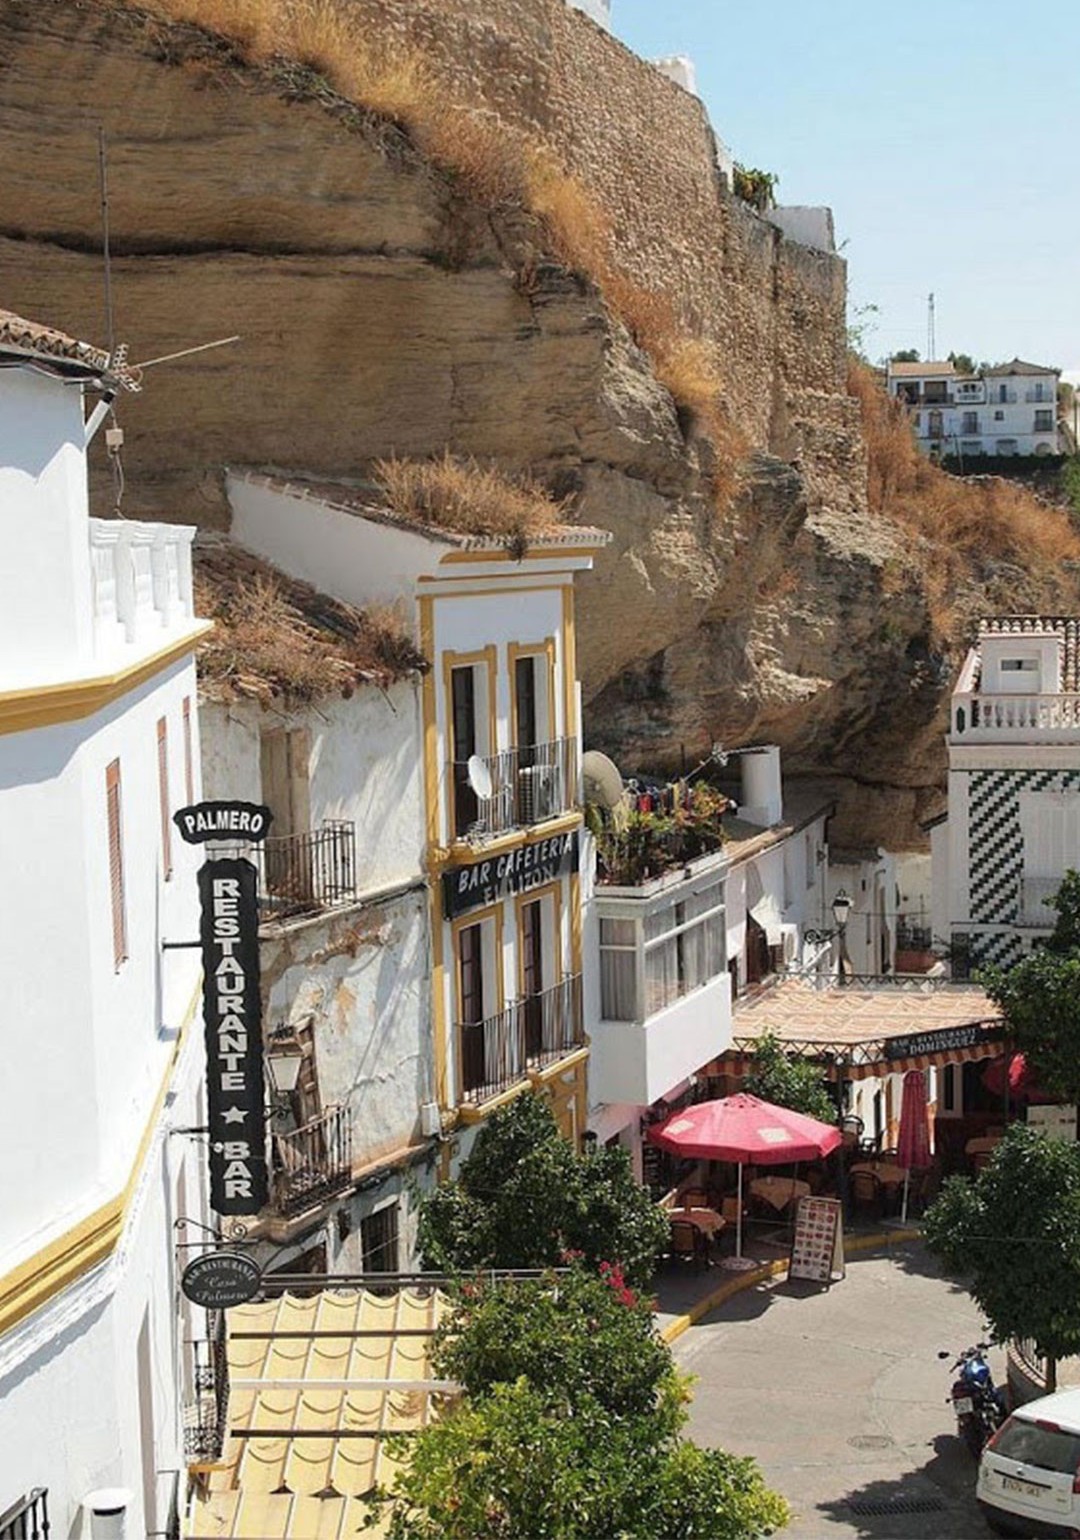 The town under the rocks, Setenil, Spain.